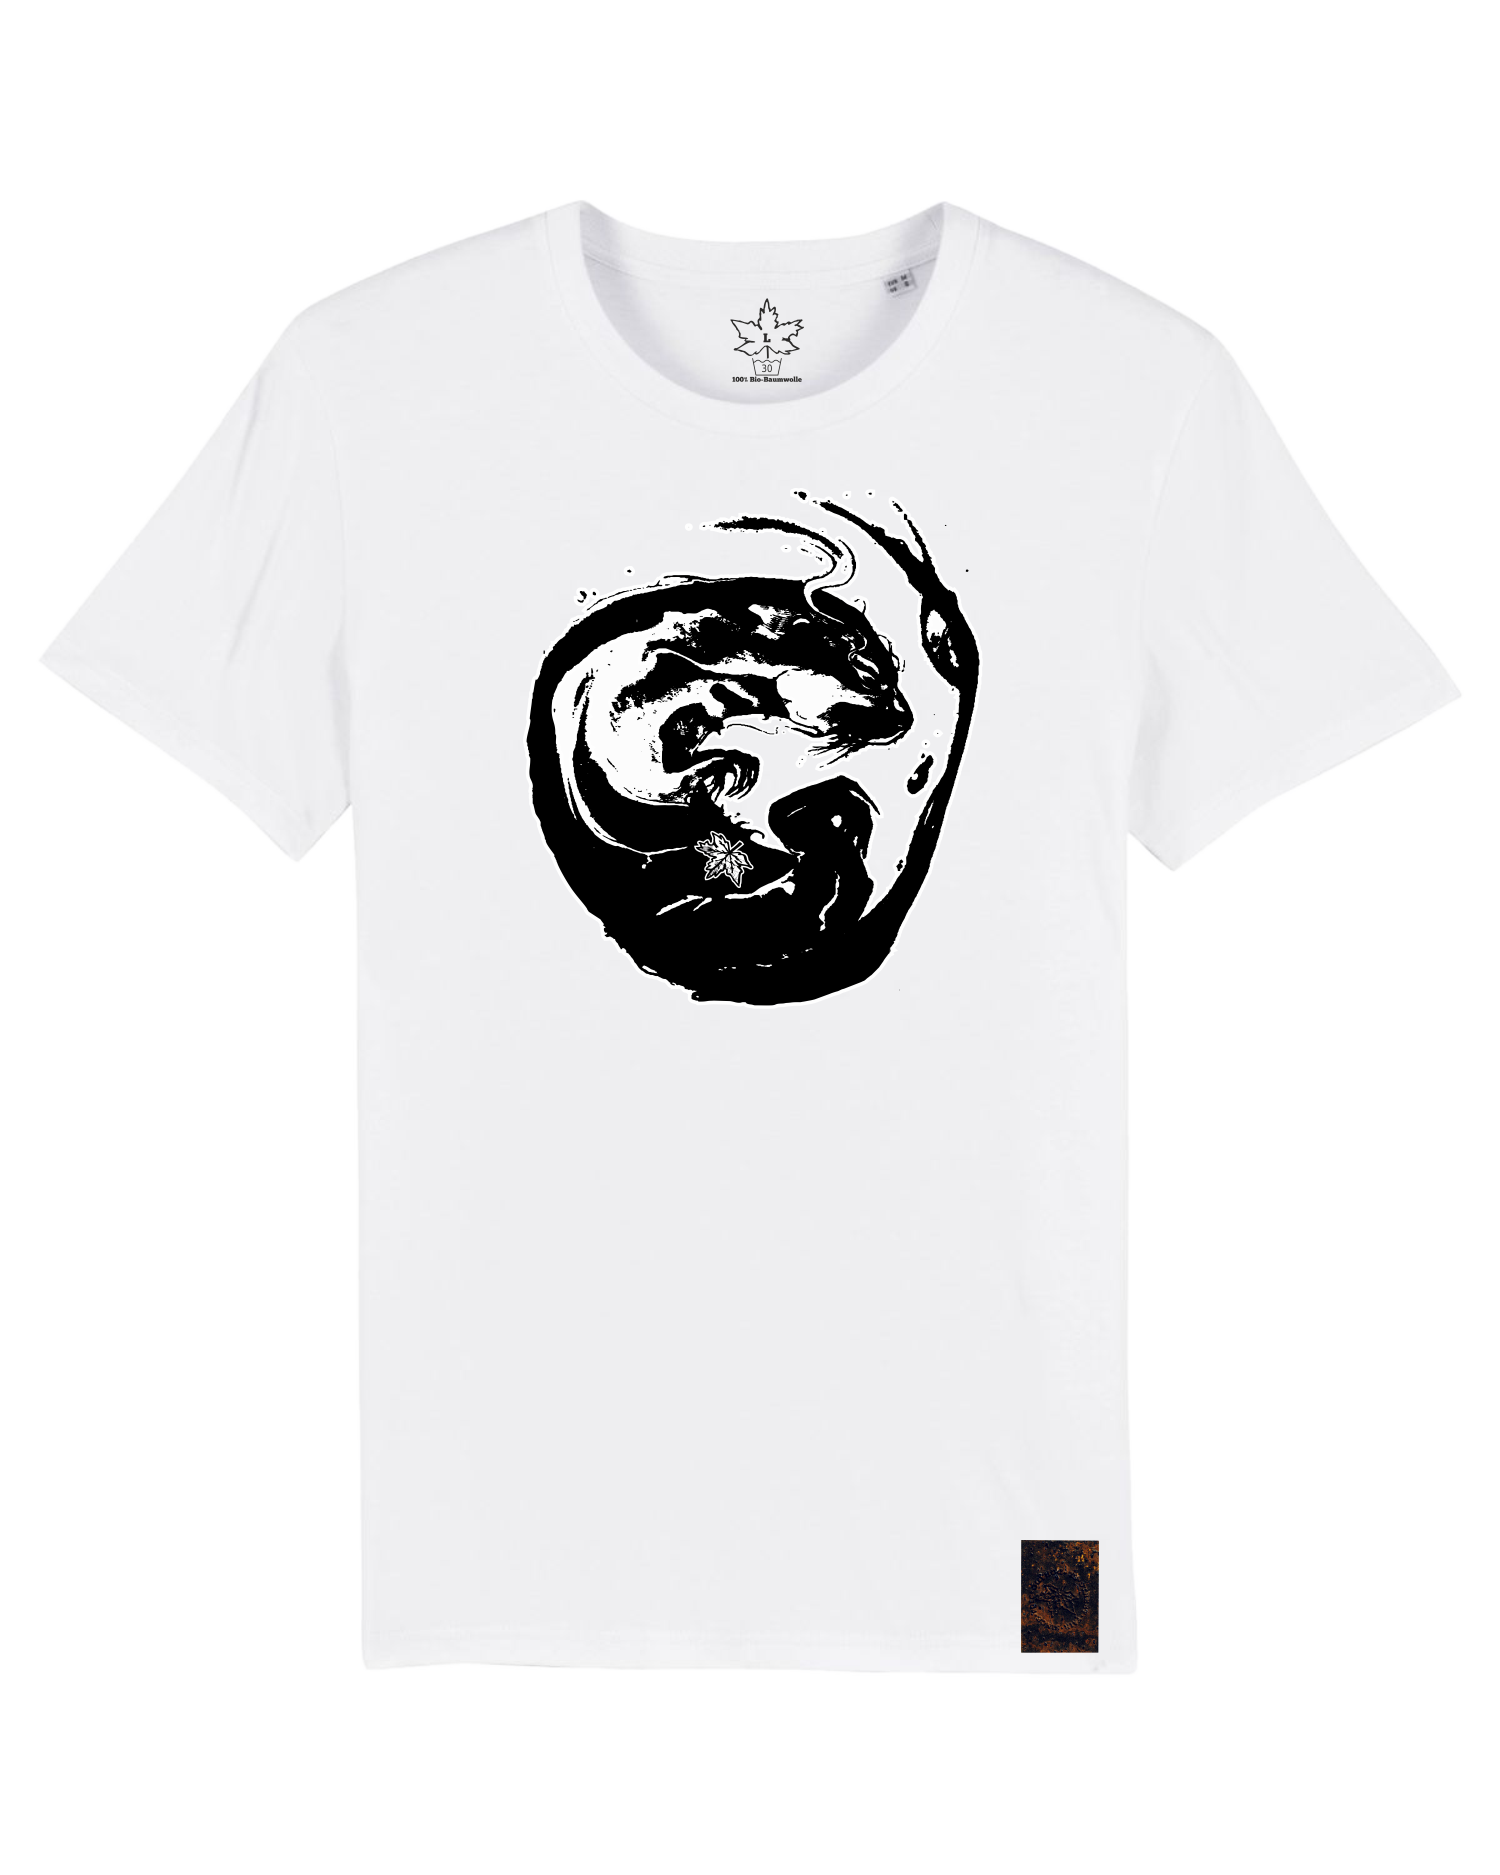 Alpha Otter - Bio Herren/Unisex Shirt